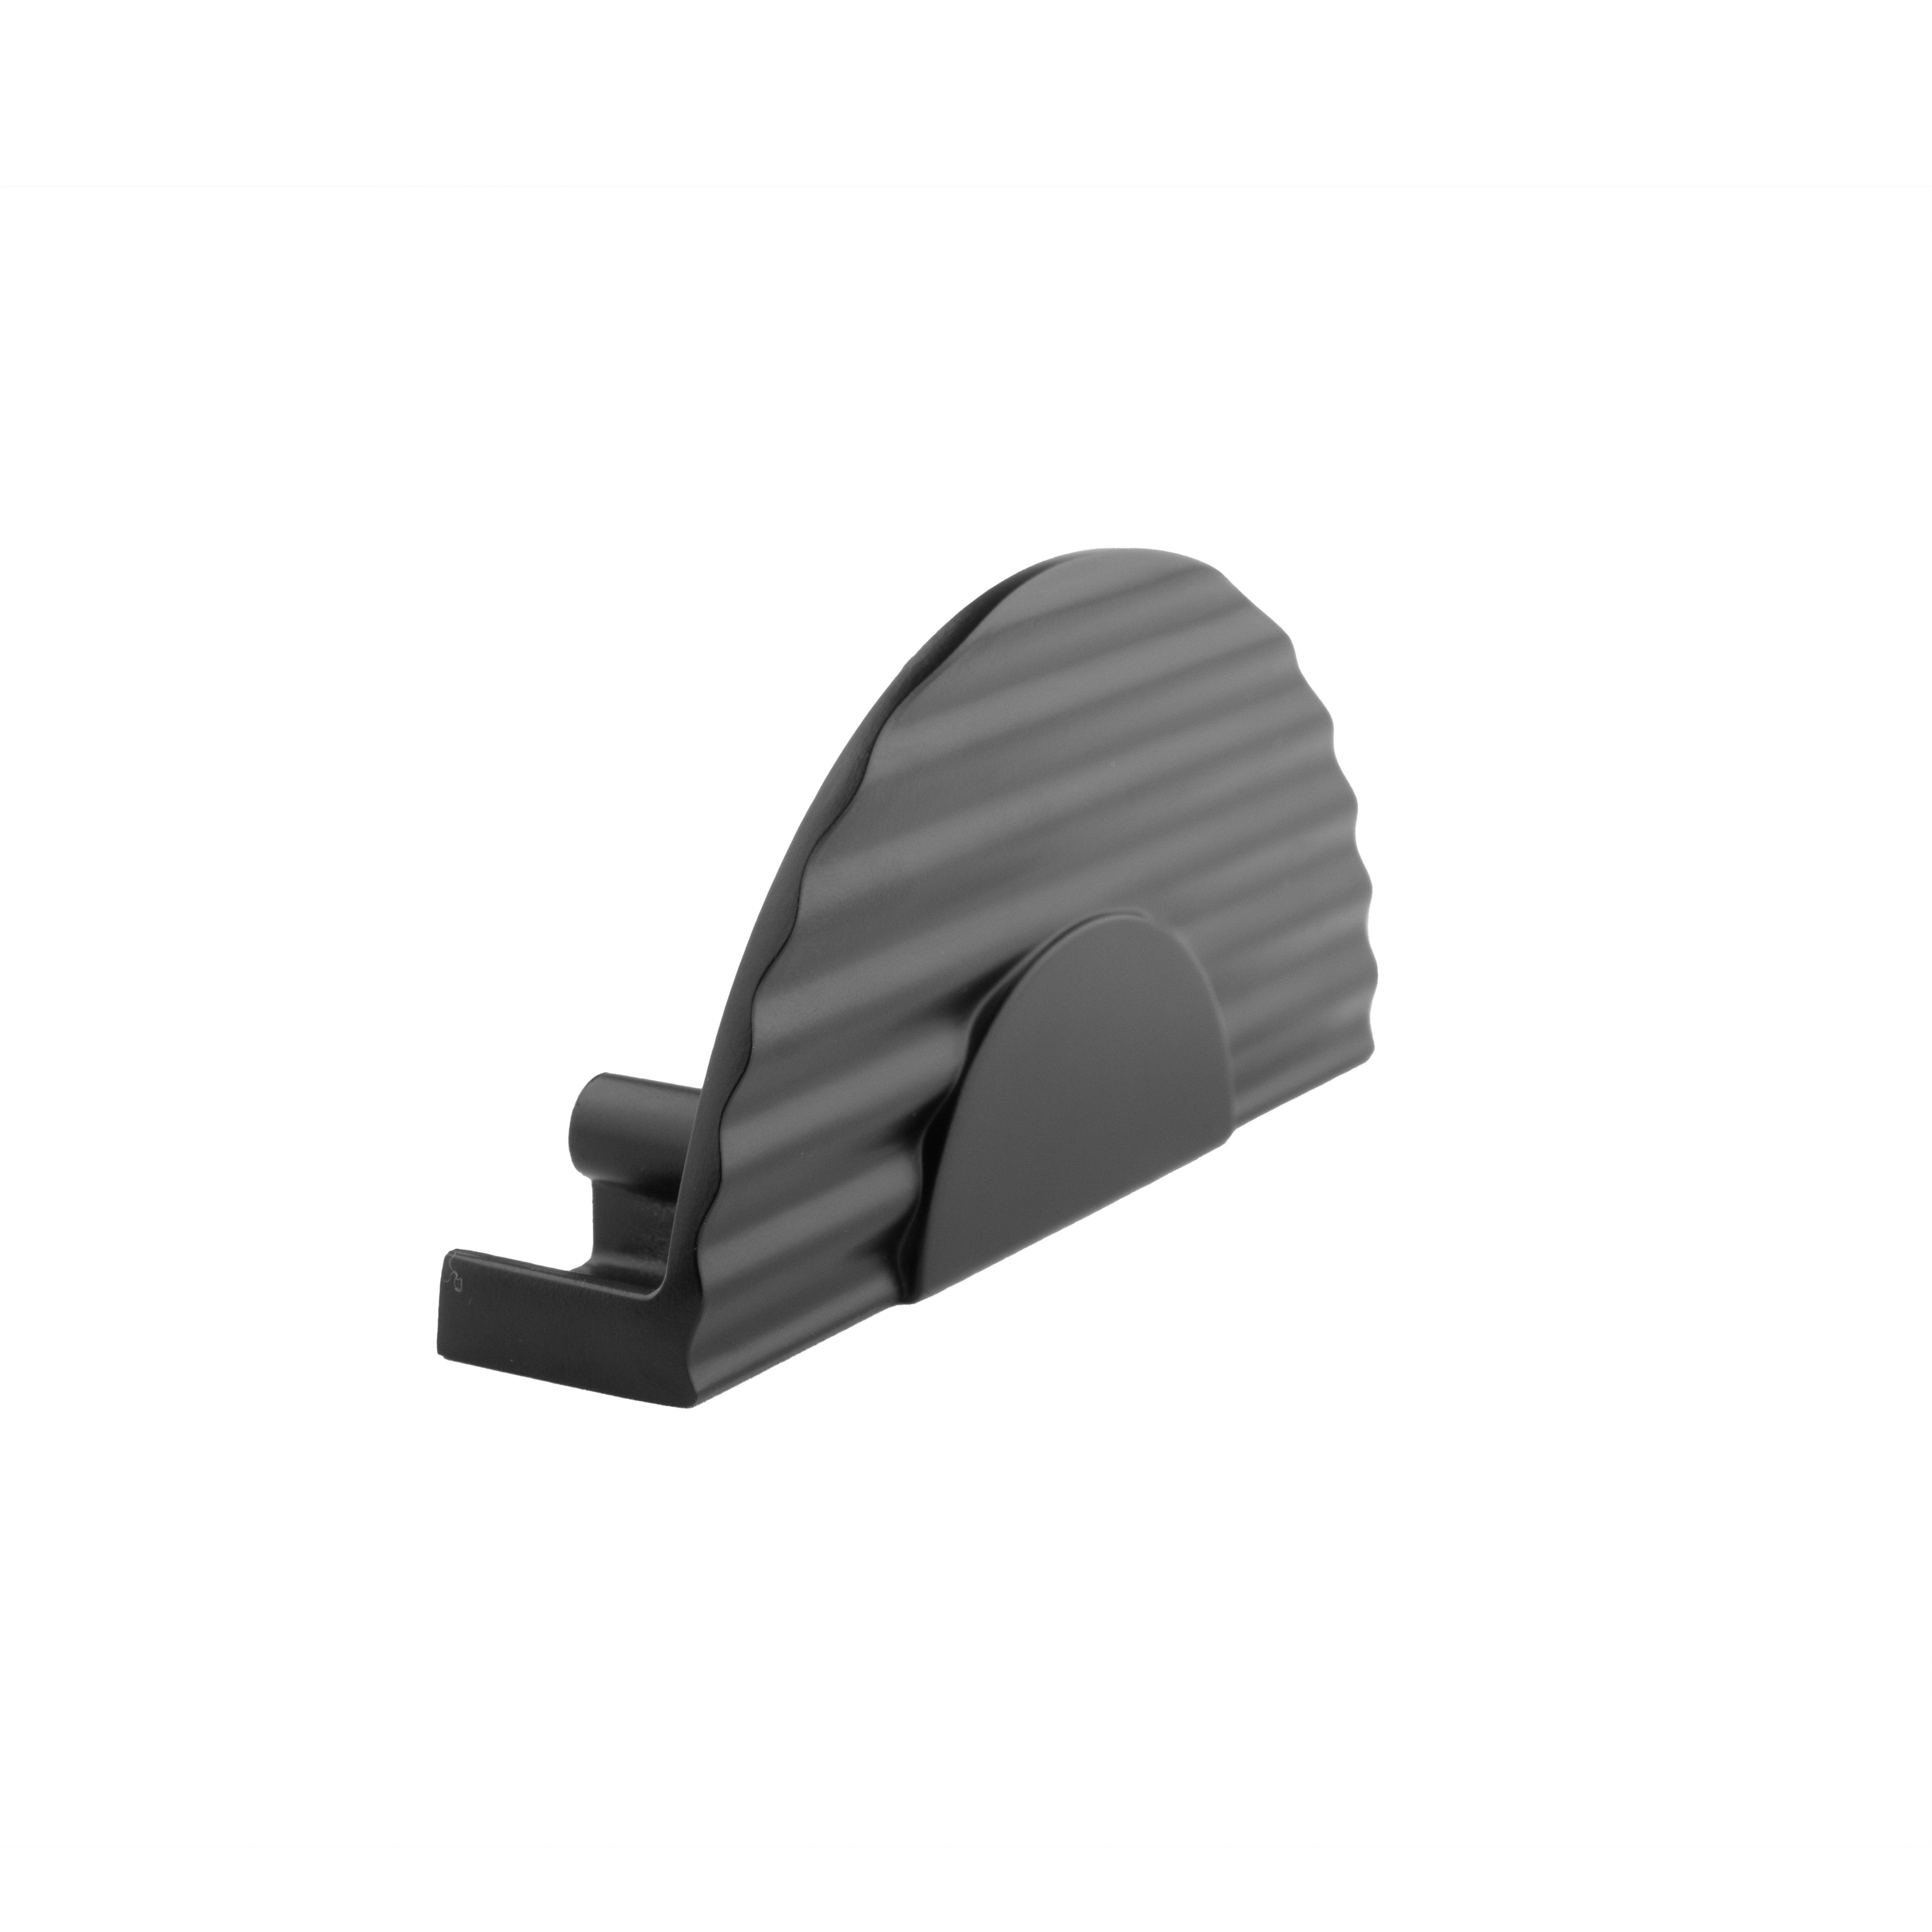 Lunette Pull Knob Handles 150mm / Black / Zinc Alloy - M A N T A R A